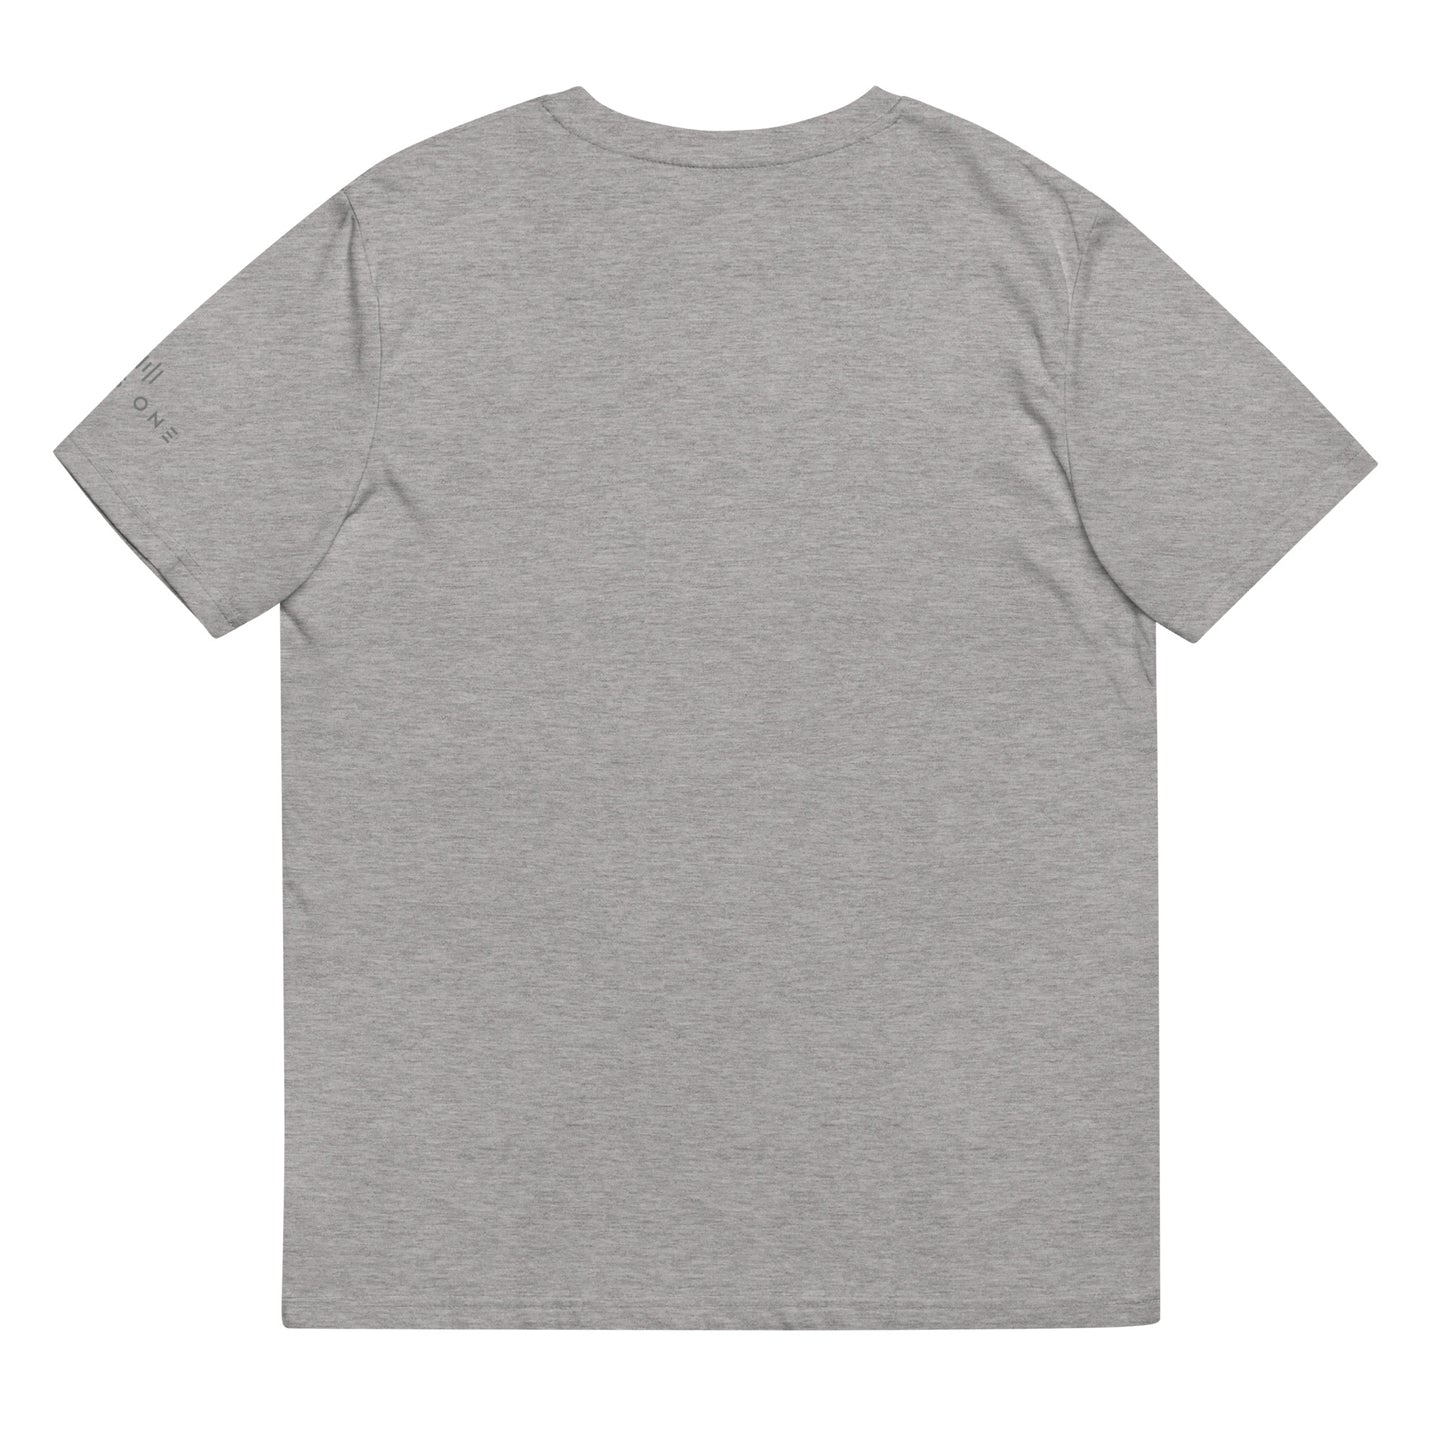 SK8 (v8) Unisex organic cotton t-shirt